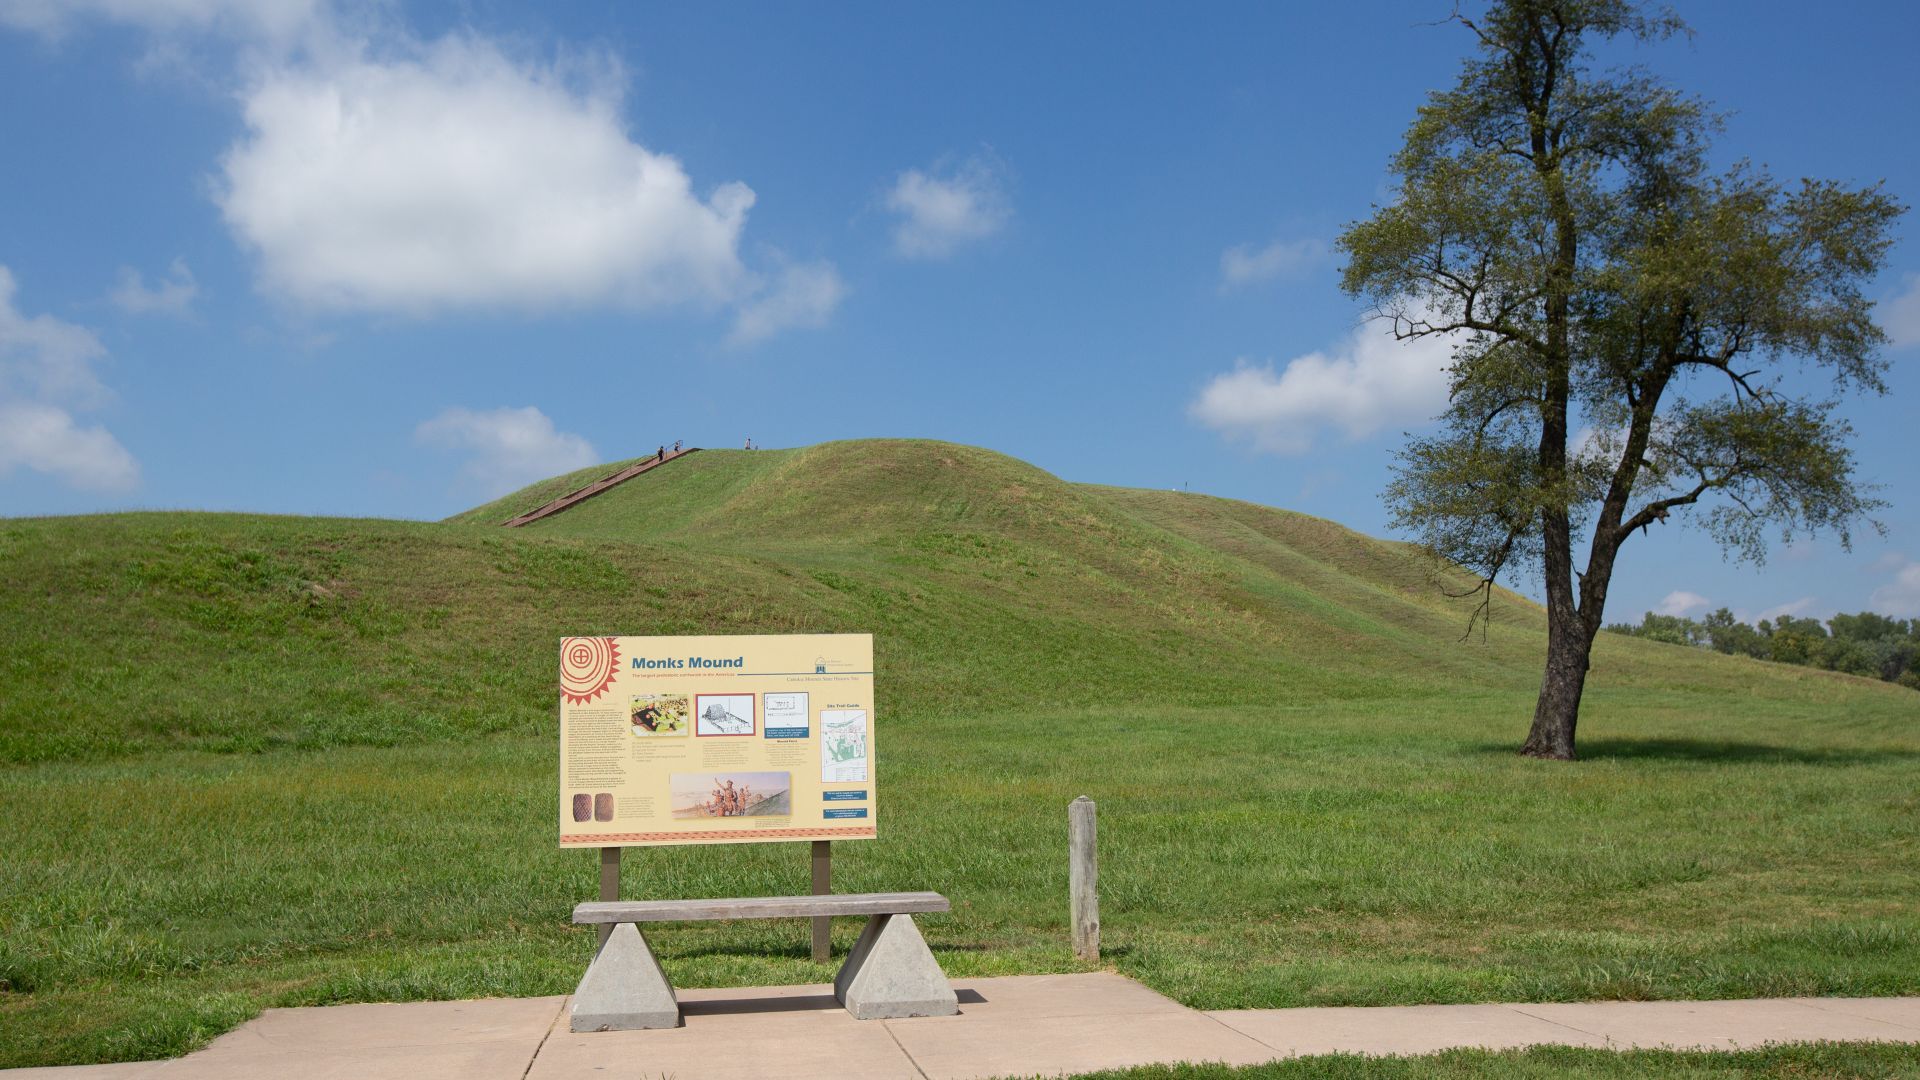 Cahokia Mounds State Historic Site has interpretive signage.